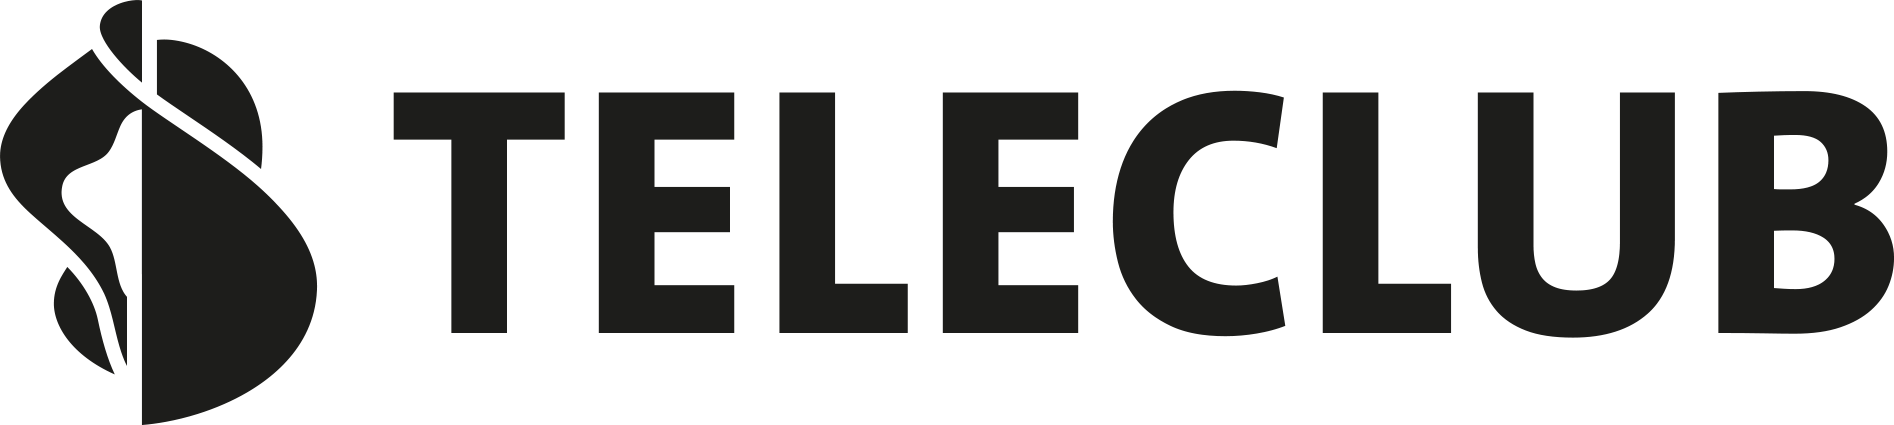 Logo de Teleclub